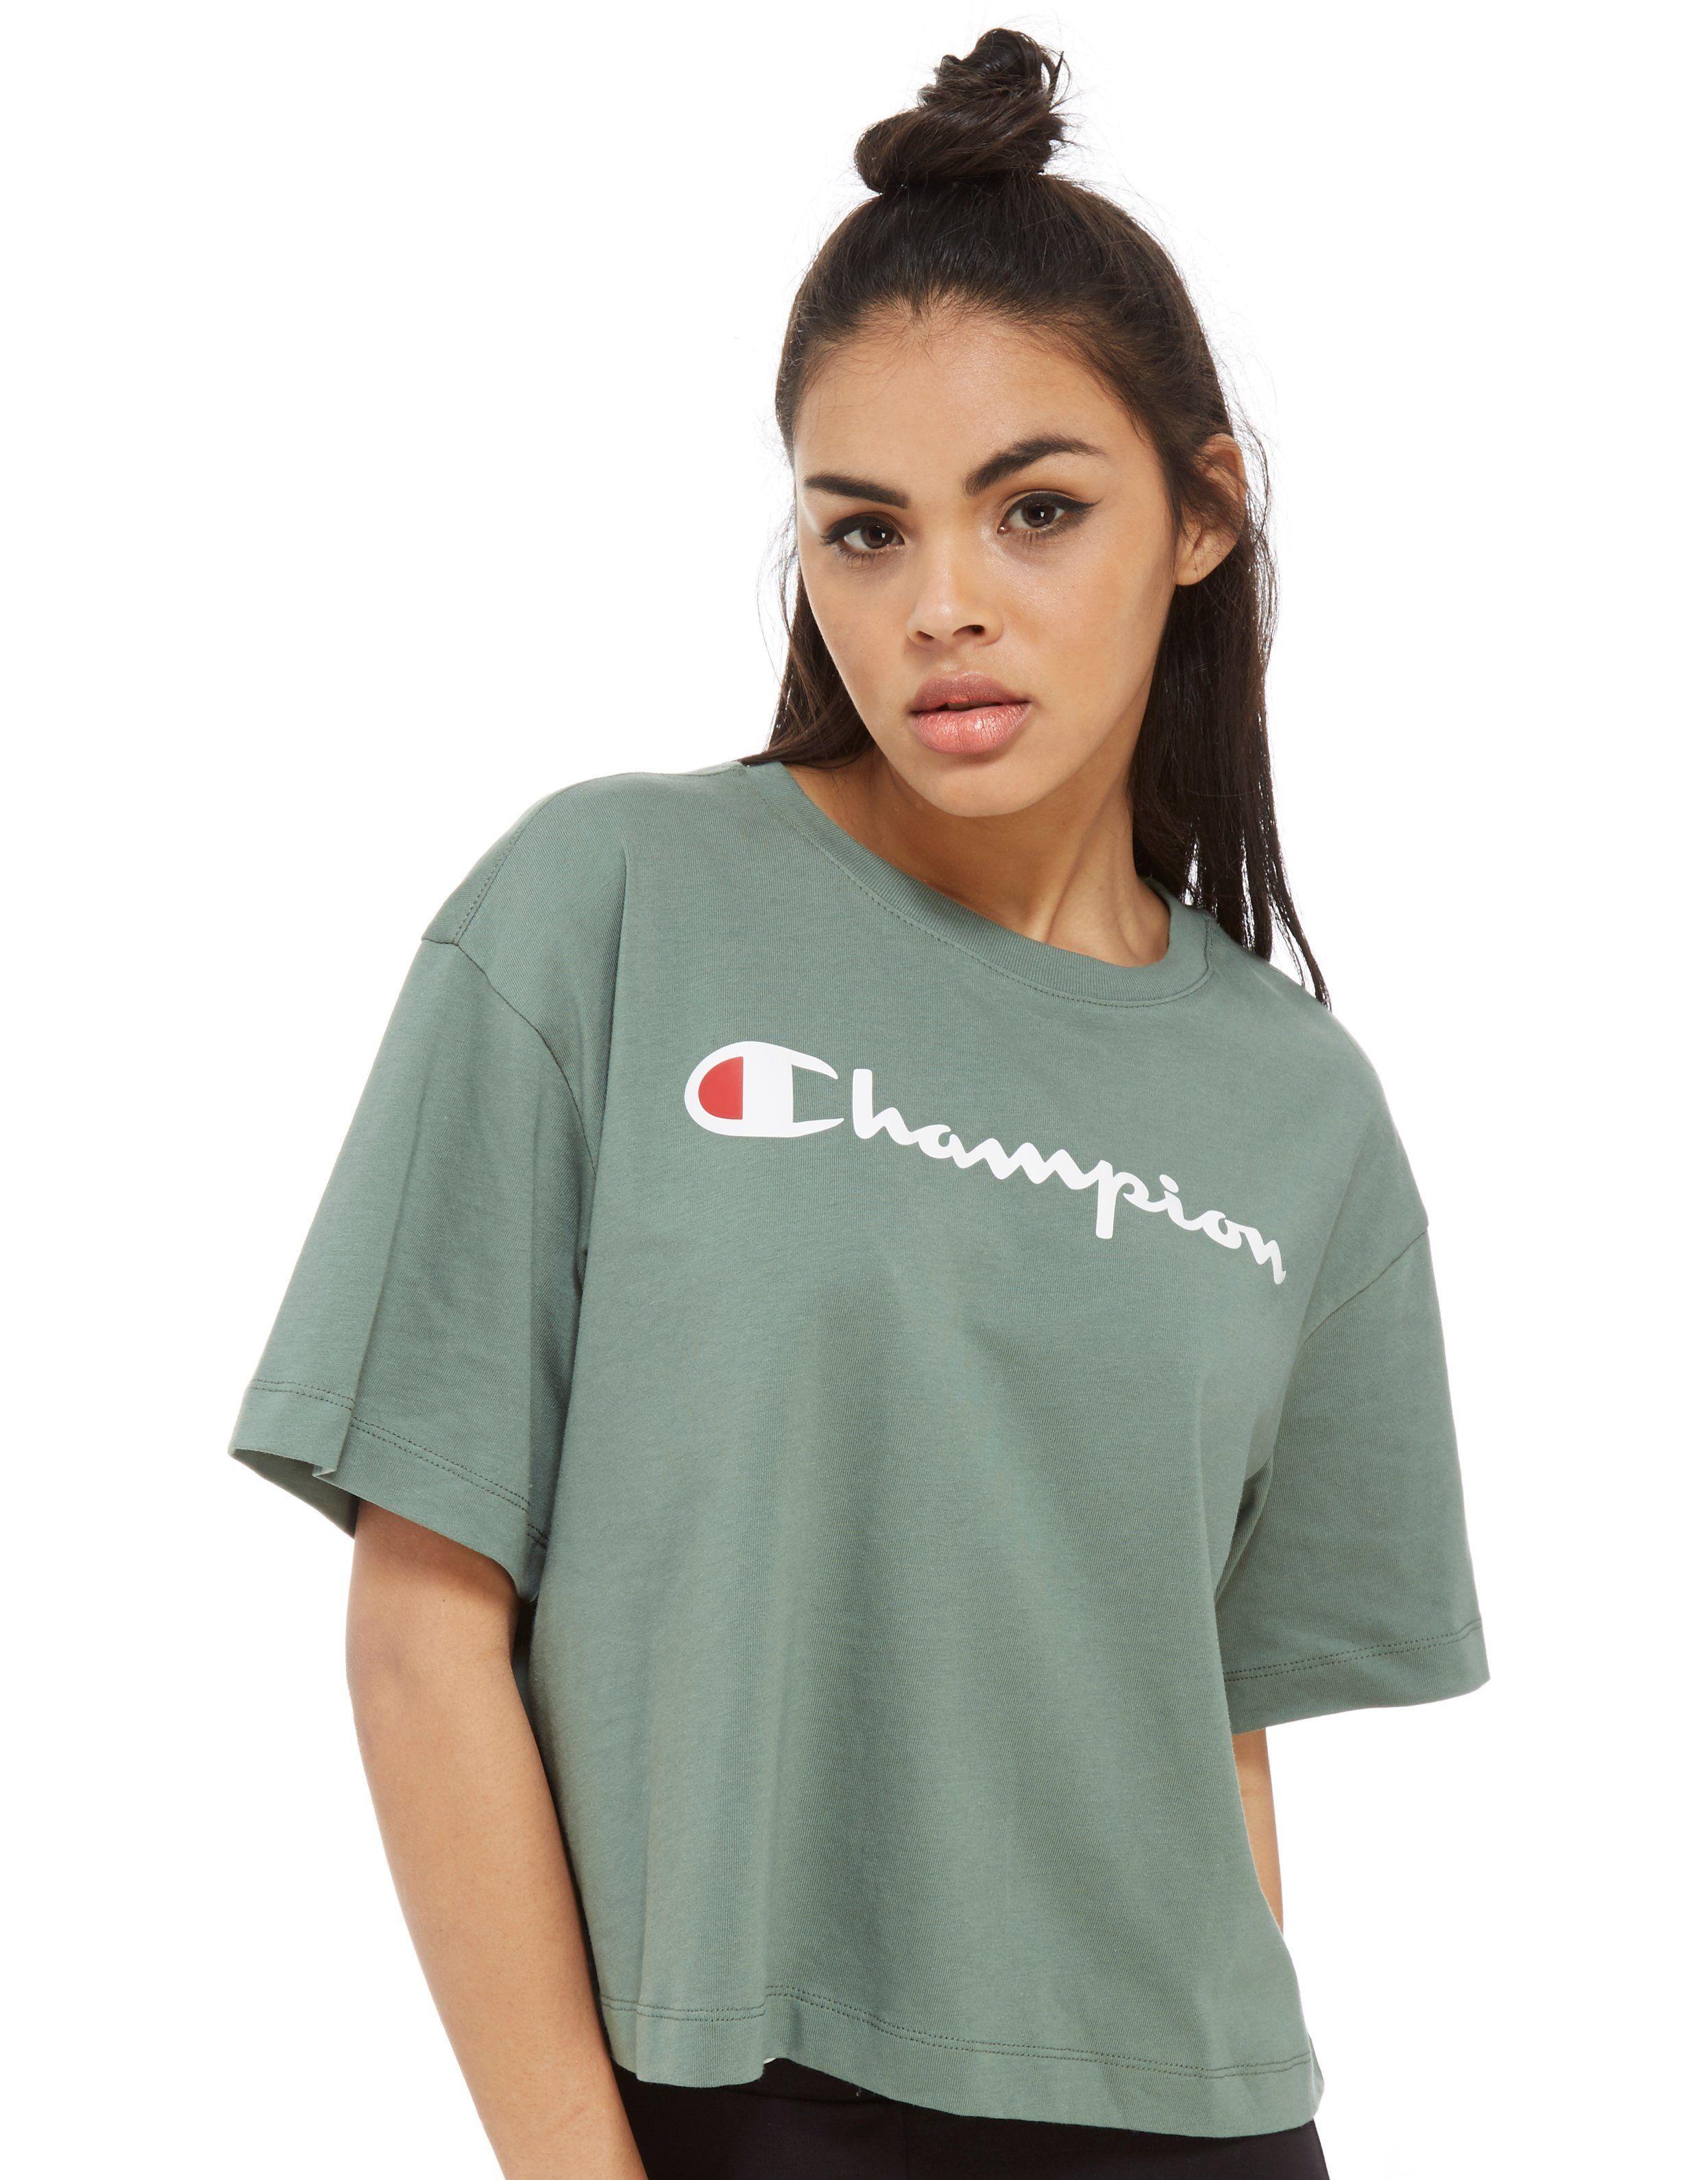 Casual Clothing Retailer Logo - Champion Boxy Logo T Shirt Online For Champion Boxy Logo T